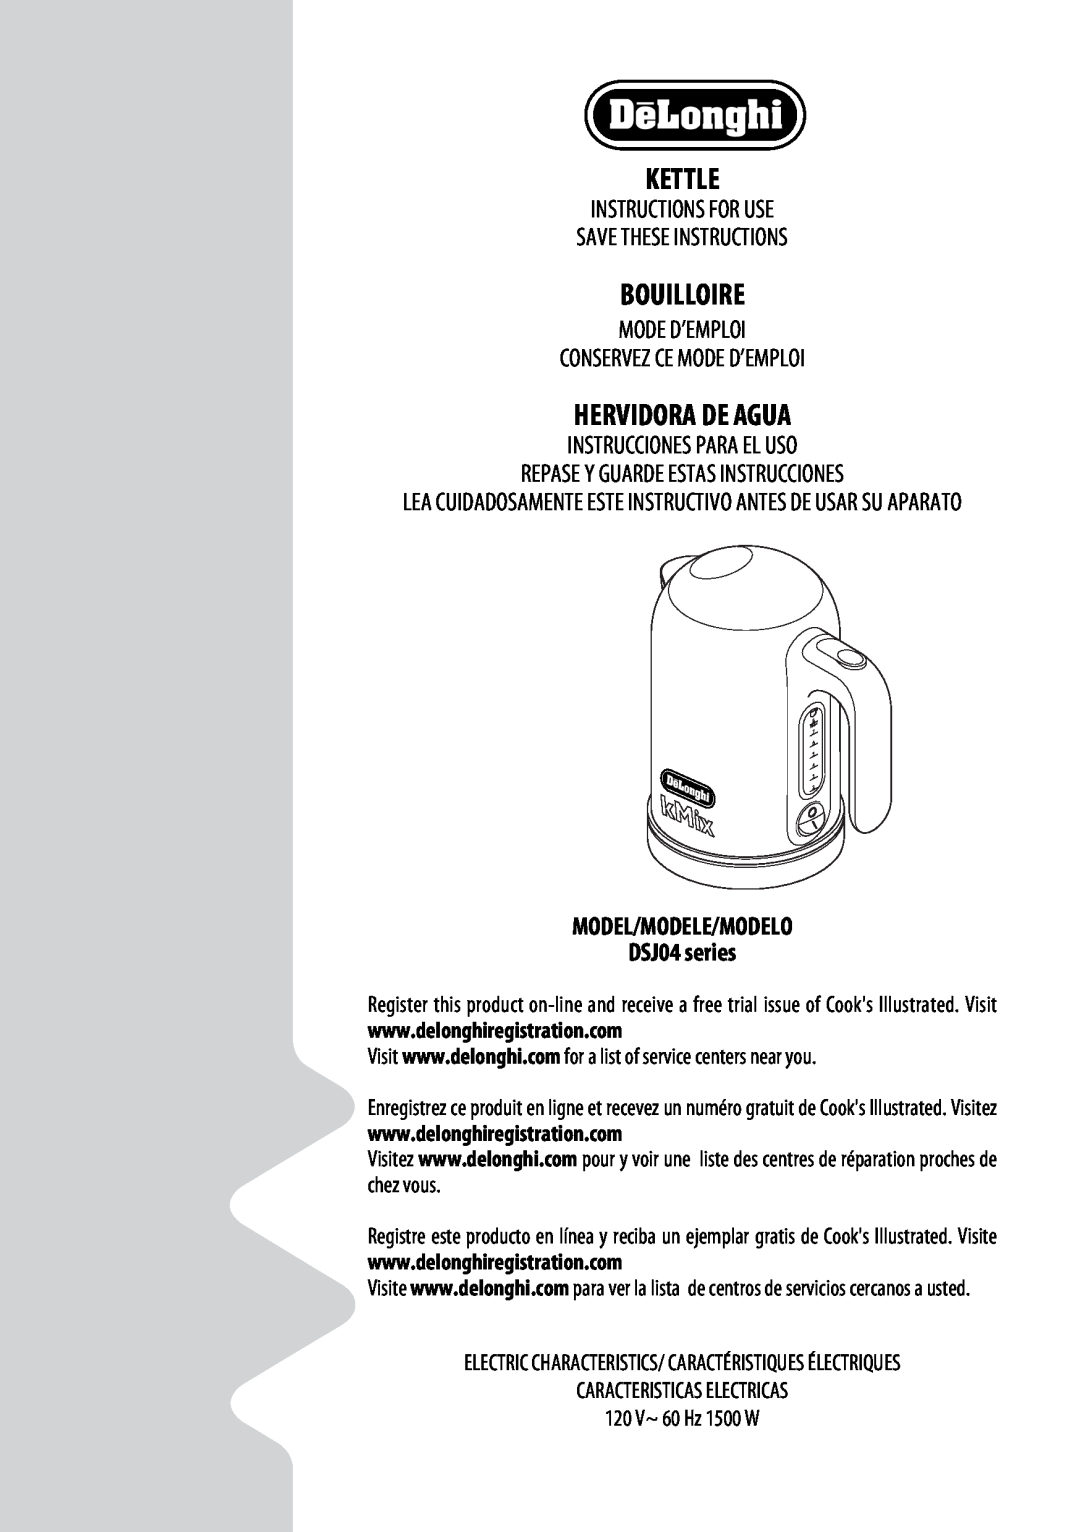 DeLonghi manual Kettle, Bouilloire, Hervidora De Agua, MODEL/MODELE/MODELO DSJ04 series 